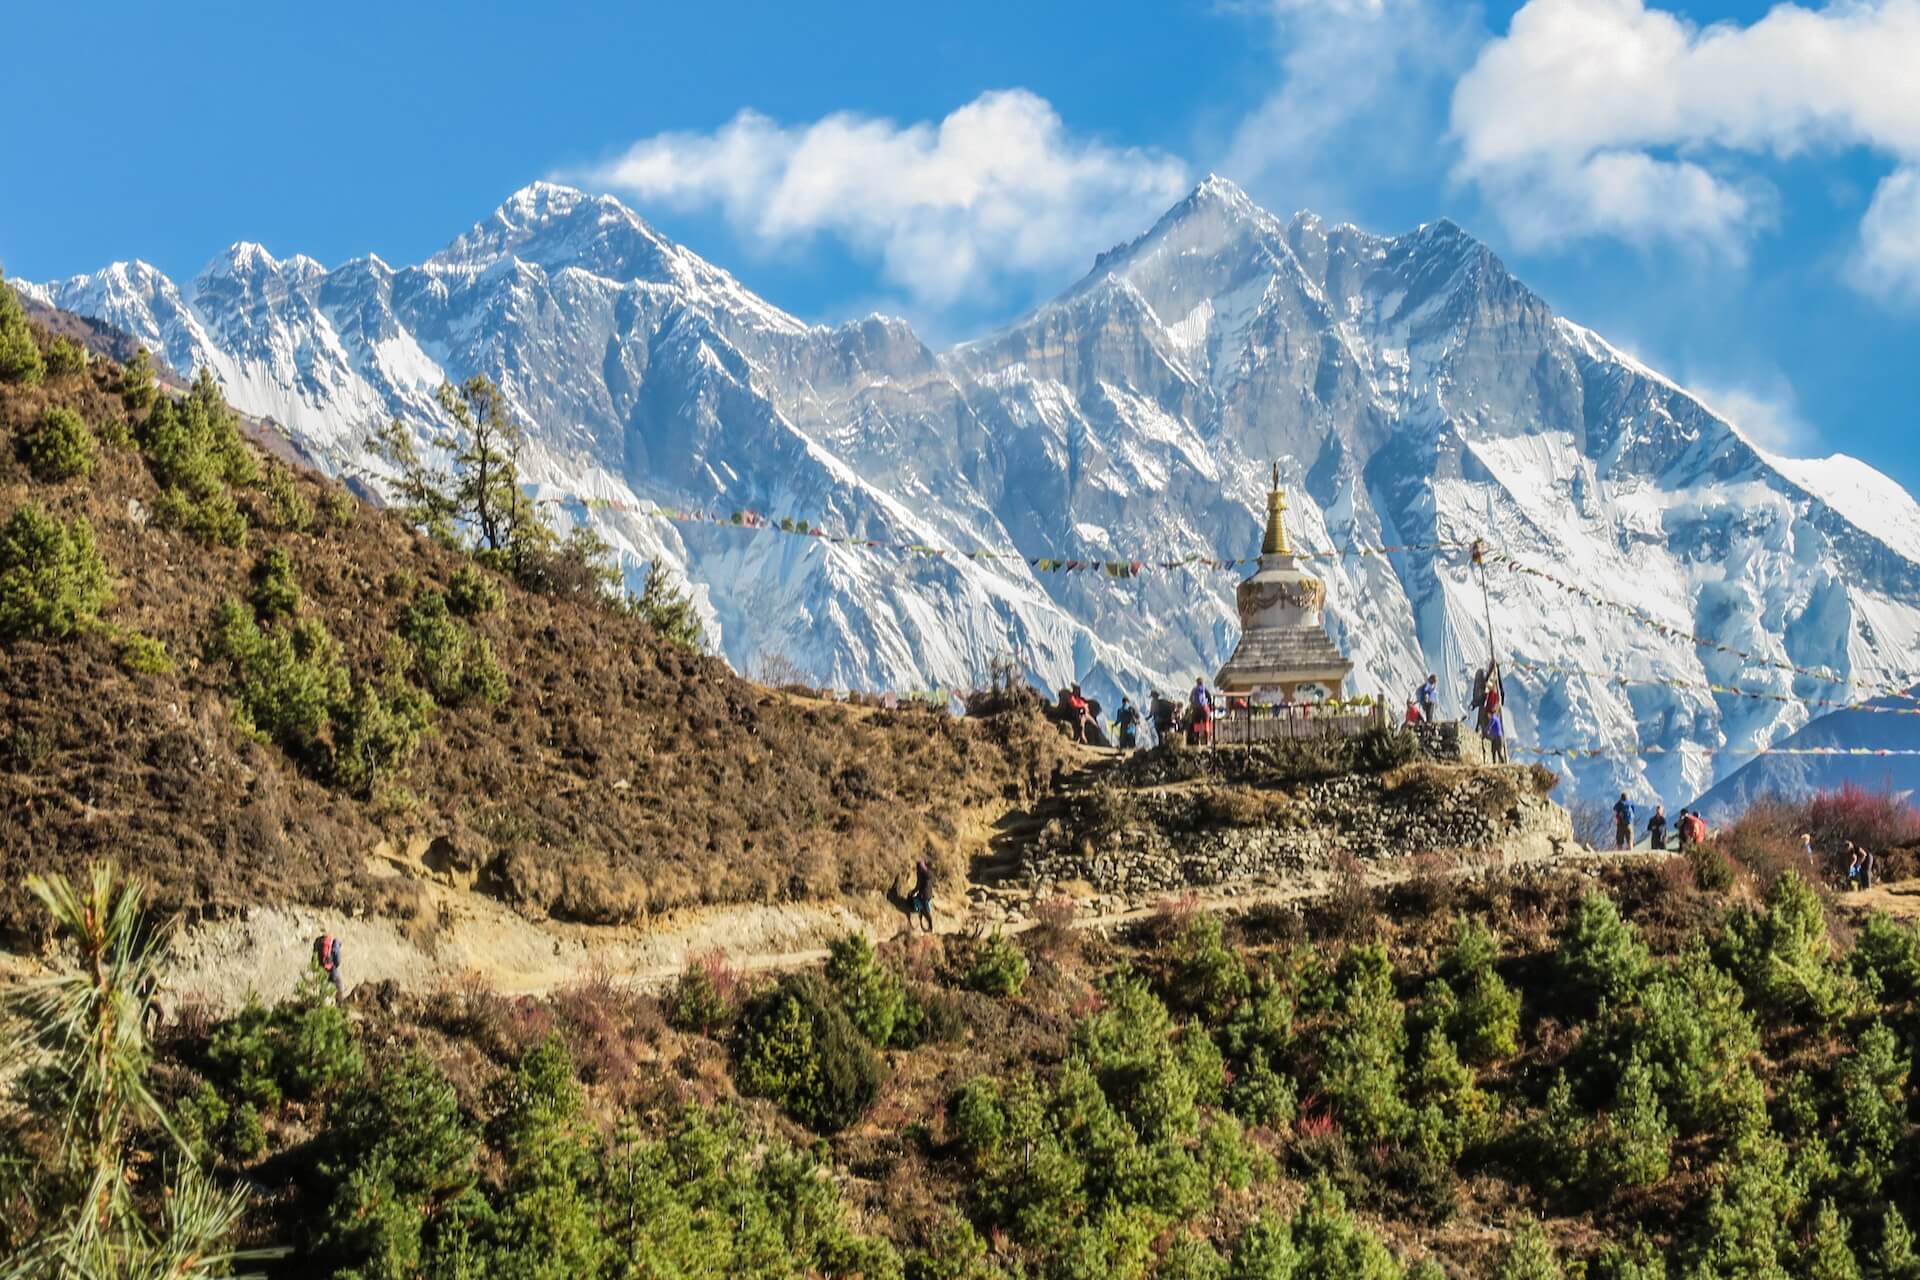 Top 10 Peaceful Yoga Retreats in Nepal (2024) - The Yogi Wanderer